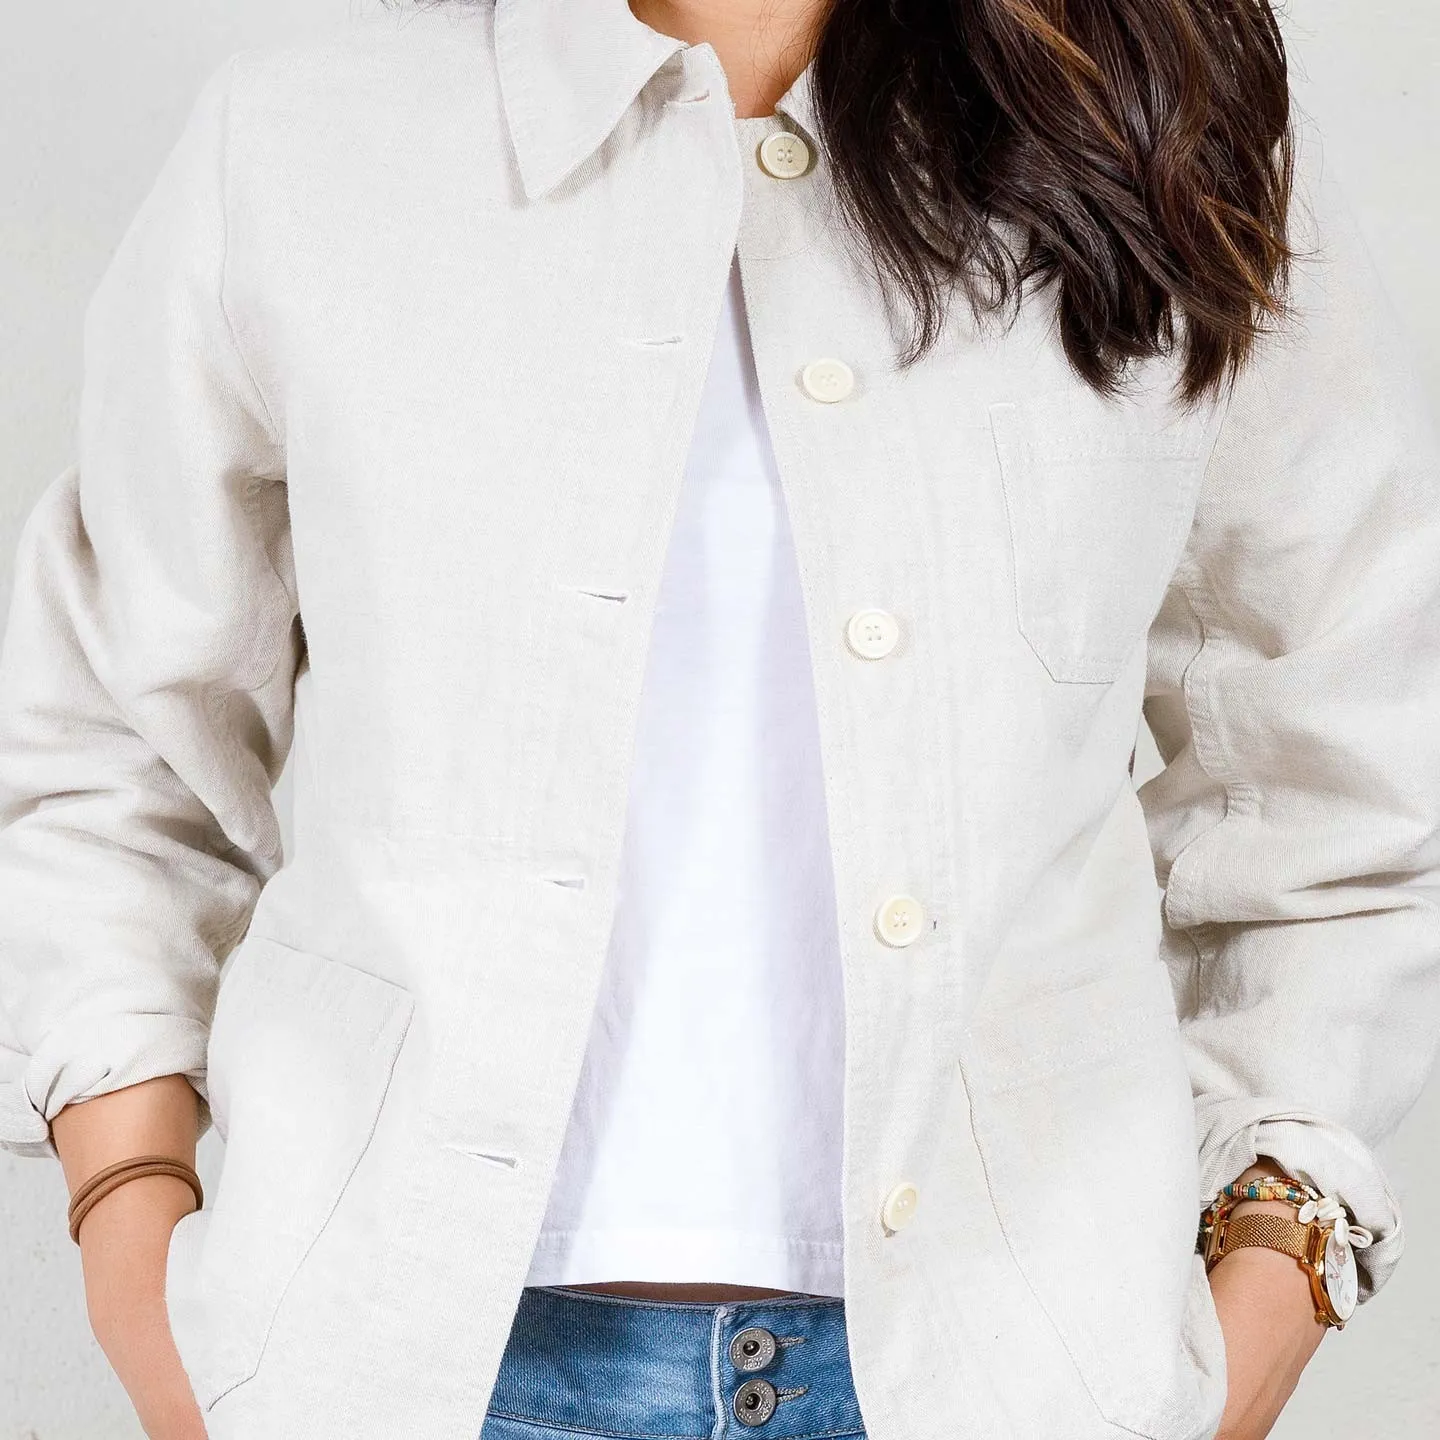 https://www.alo.paris/2488-large_default/workwear-ladies-organic-cotton-twill-jacket.jpg